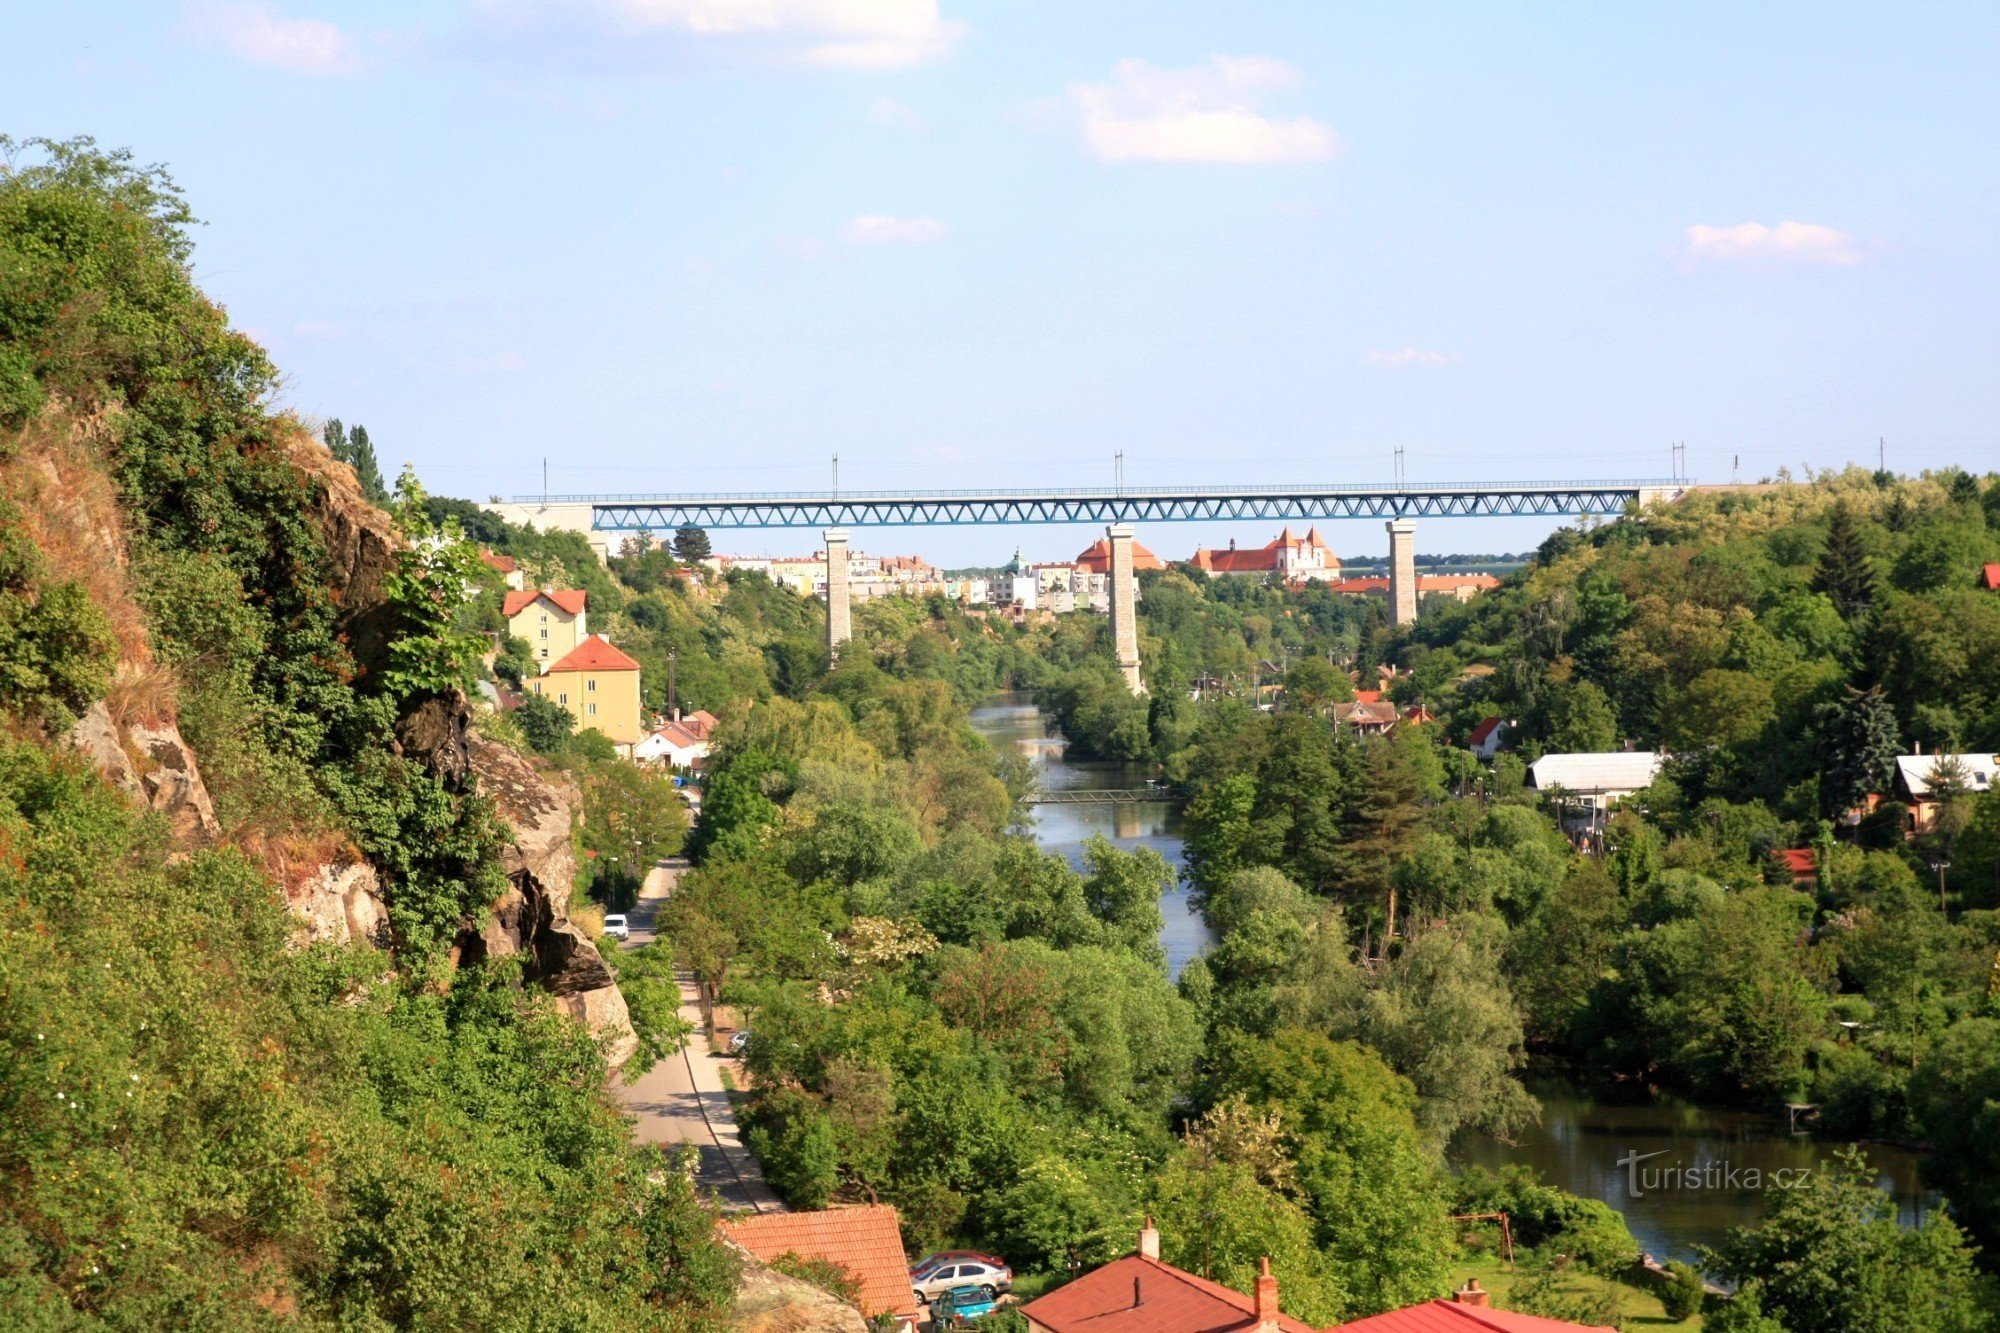 Znojmo - railway viaduct